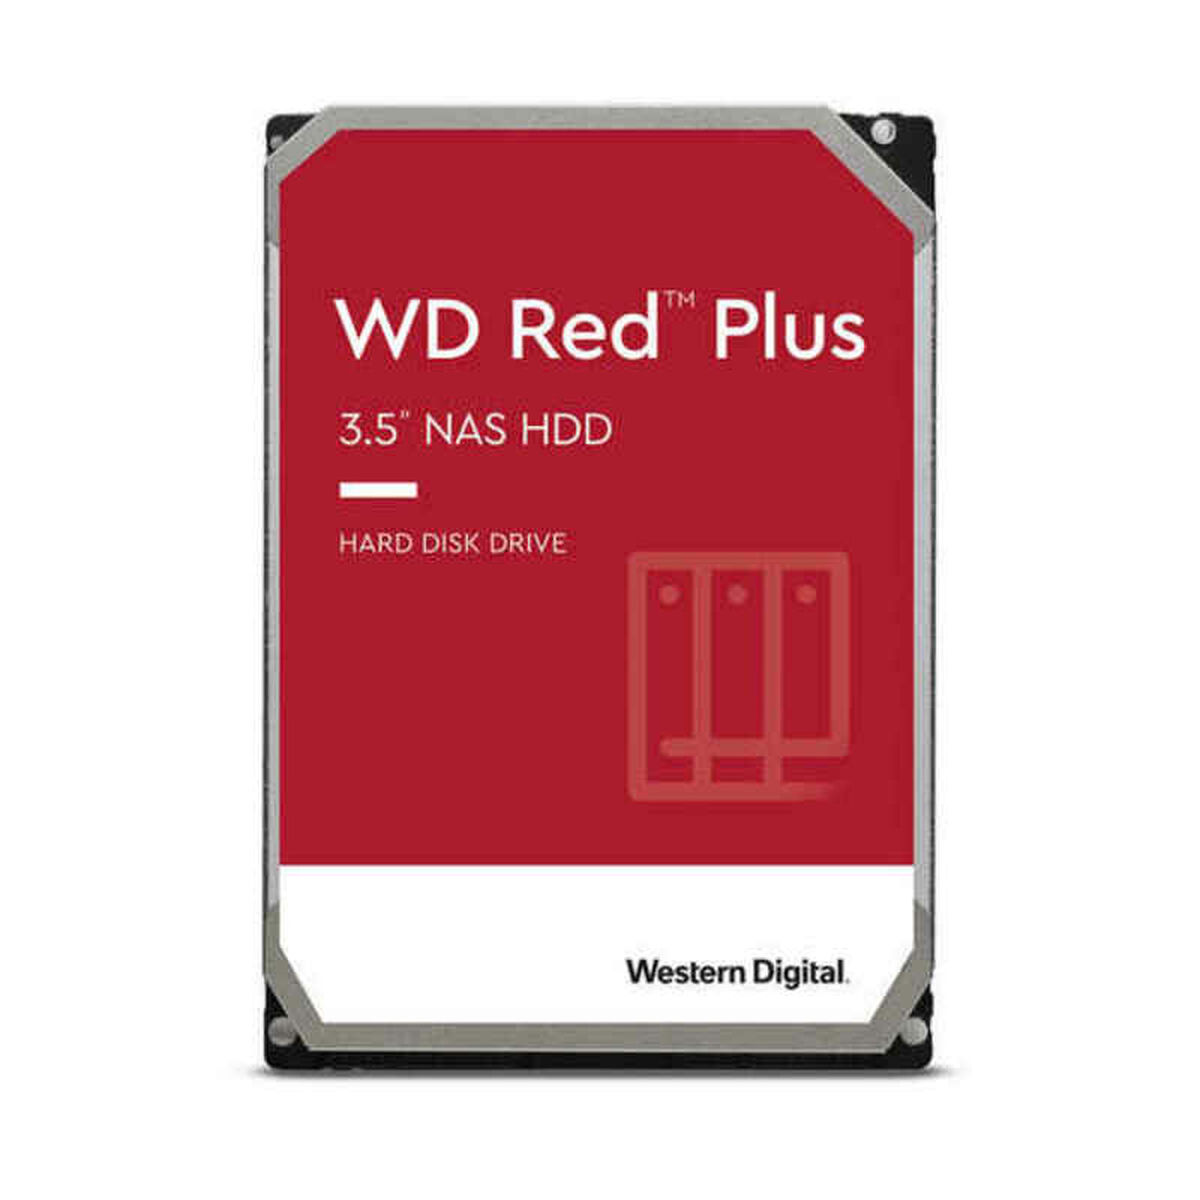 Hard Disk Western Digital WD Red Plus NAS 3,5" 5400 rpm Capacità:10 TB